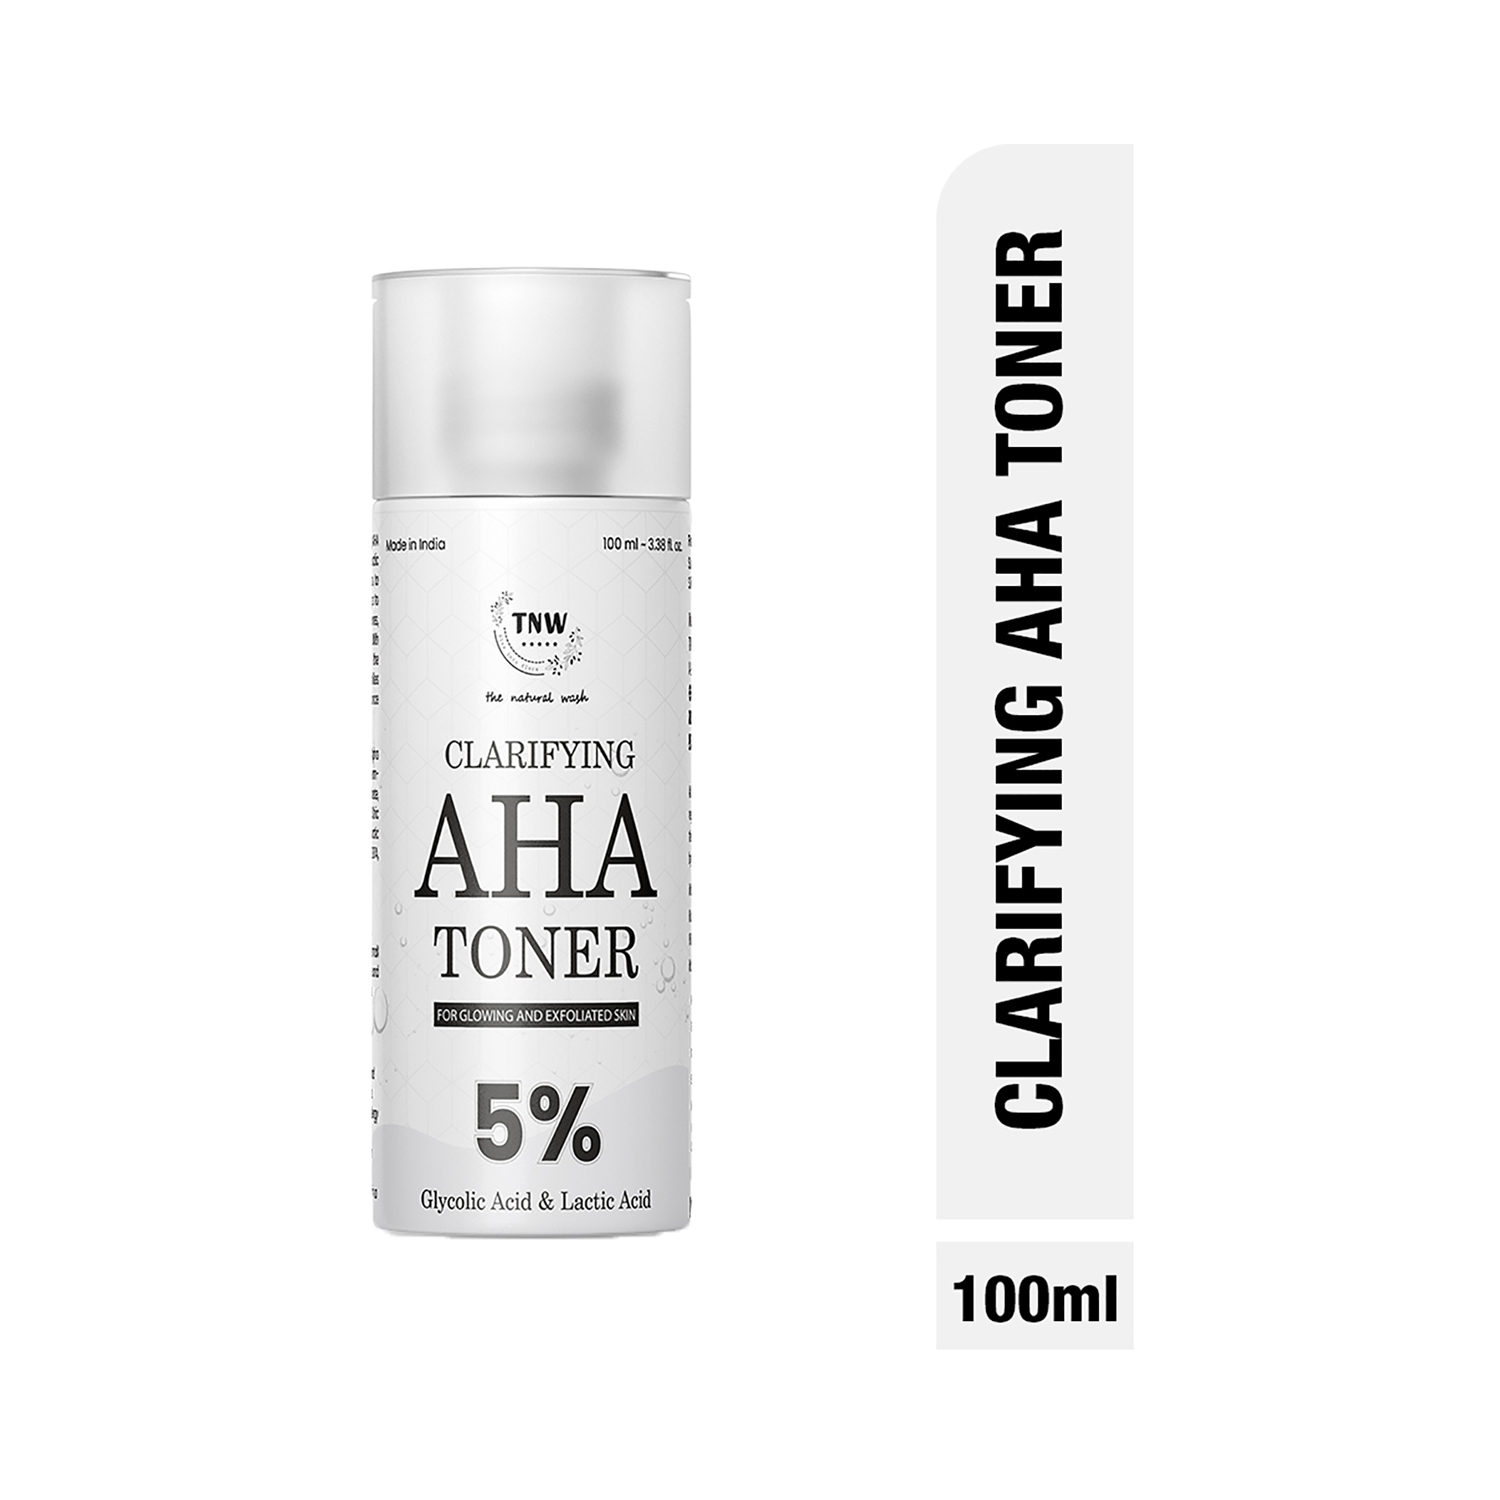 TNW The Natural Wash | TNW The Natural Wash Clarifying AHA Toner With 5% Glycolic Acid And Lactic Acid (100ml)